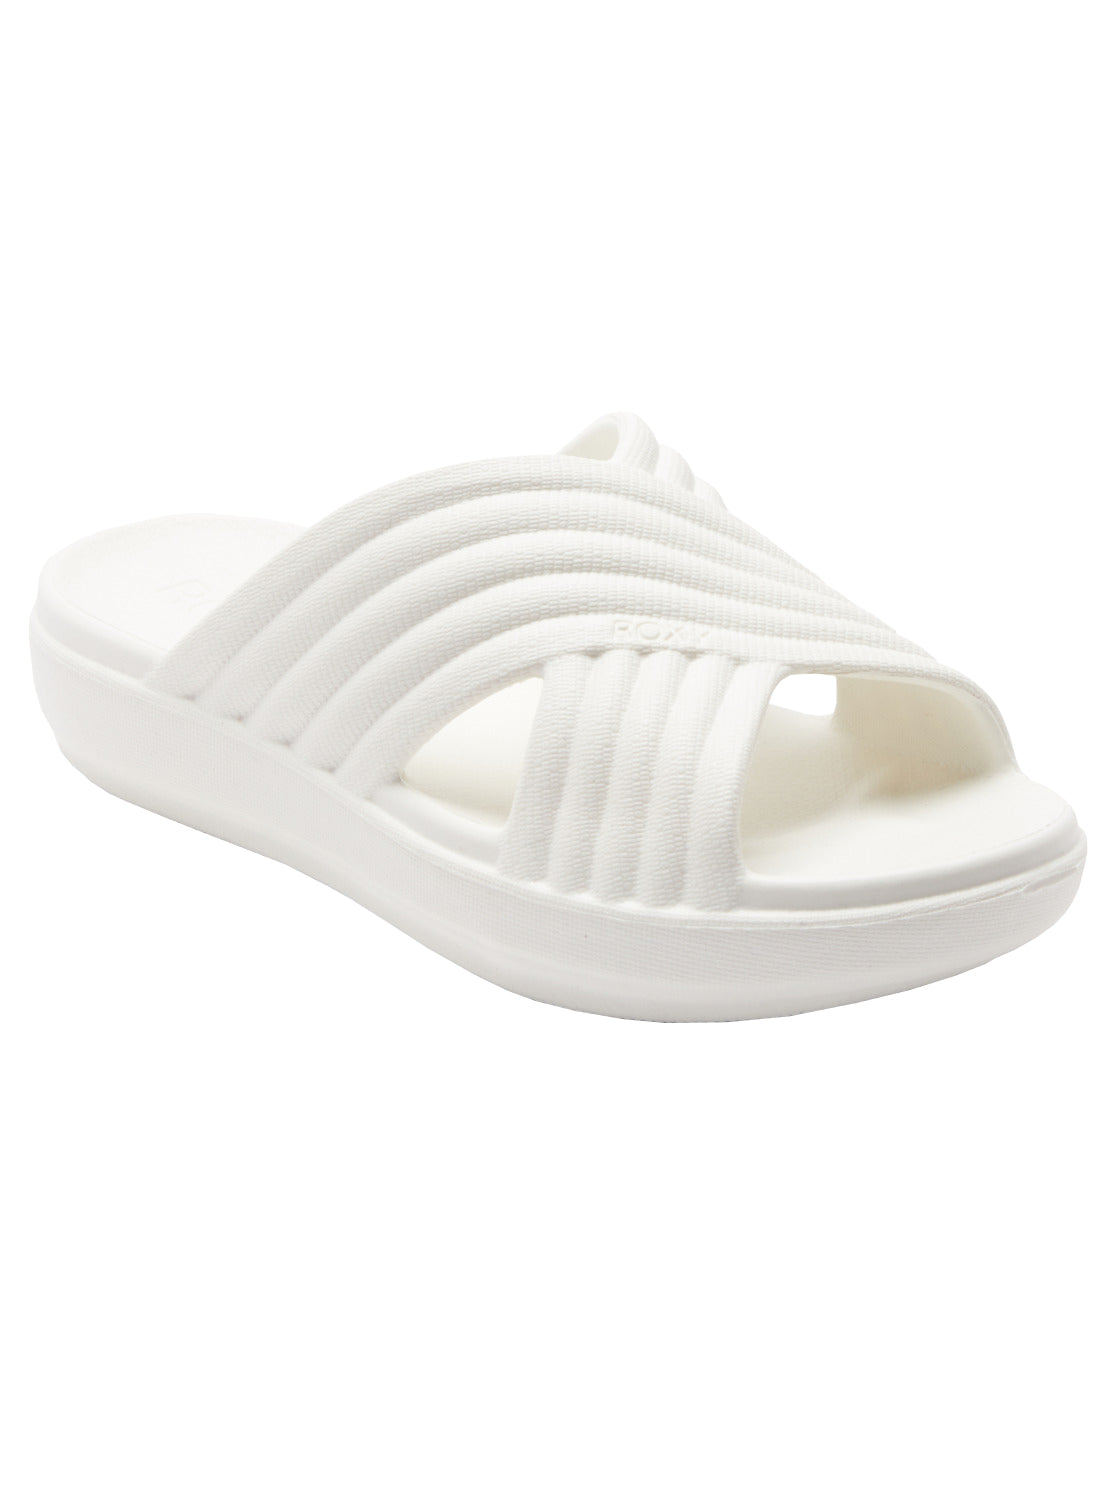 Roxy Rivie Womens Sandal WHT-White 5